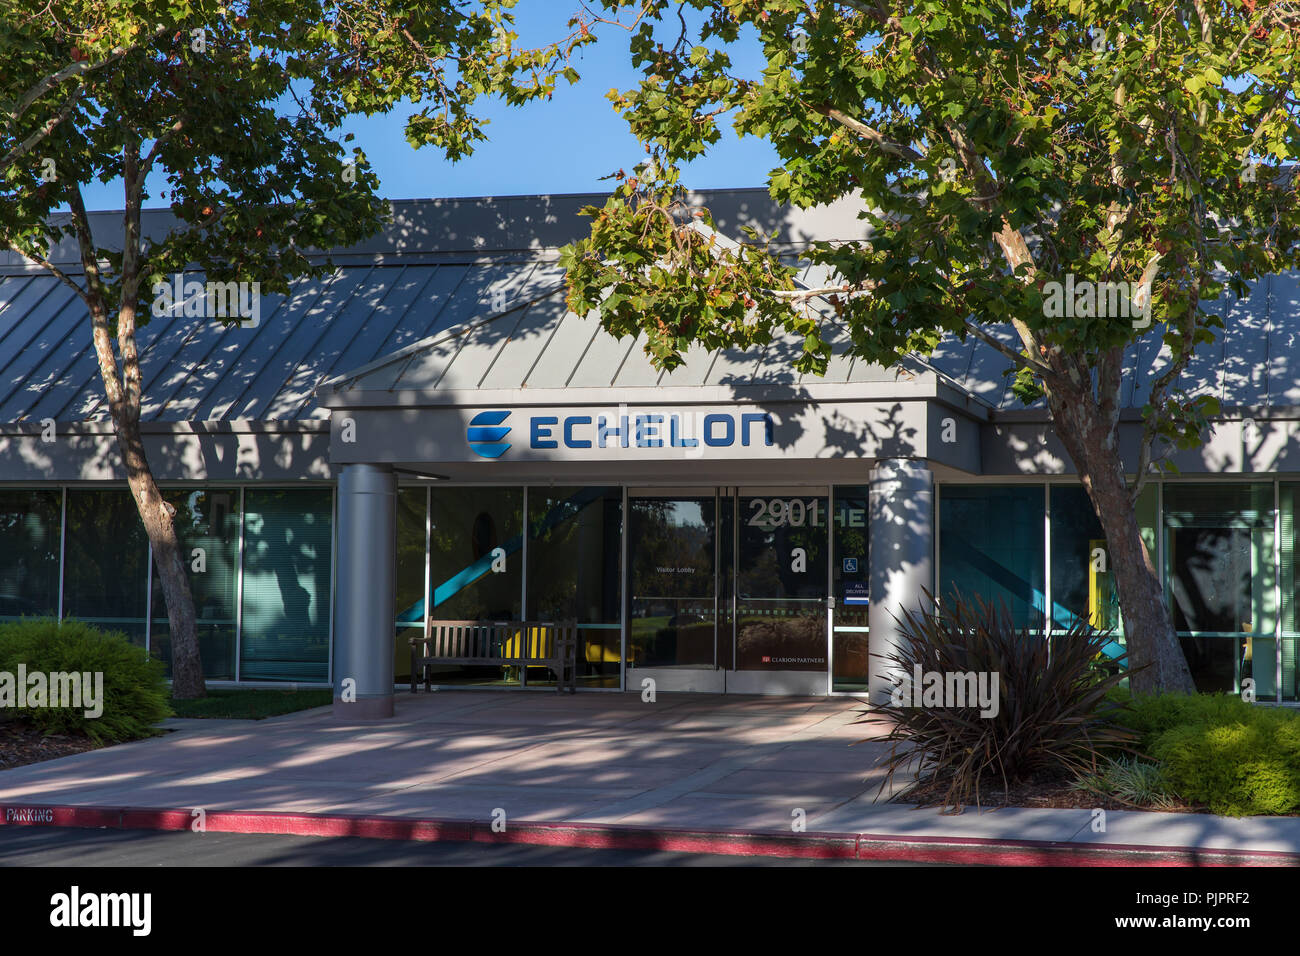 Echelon, front of building, Patrick Henry Drive, Sunnyvale, California Stock Photo